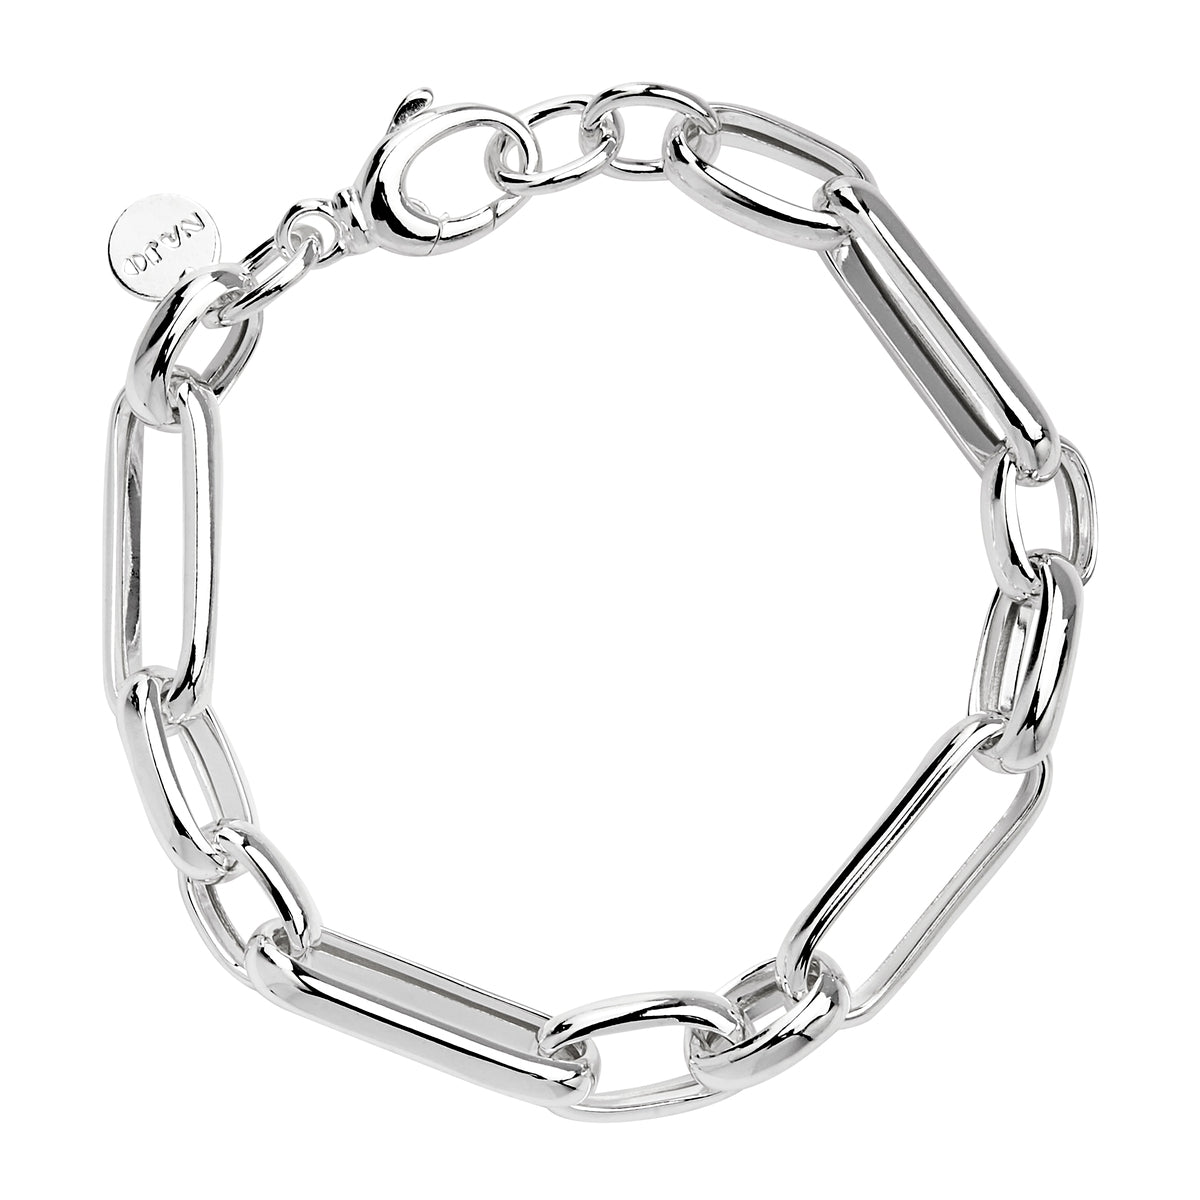 Sterling silver, 10mm wide silver elongated link chain bracelet 20cm